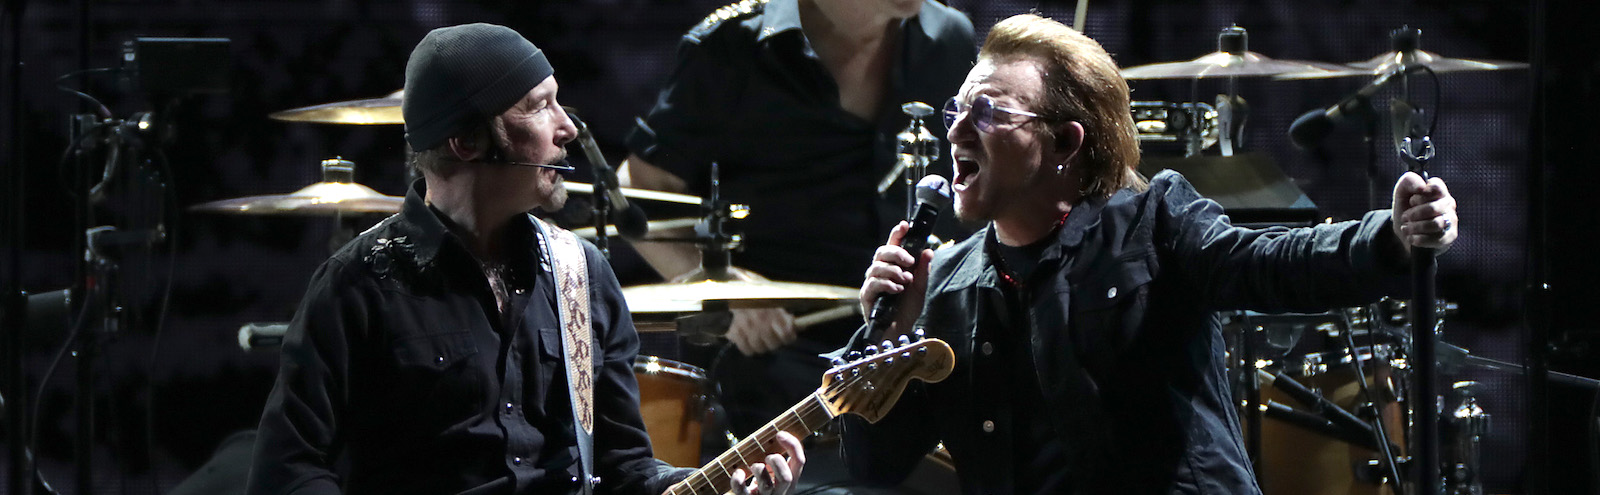 U2 Bono The Edge 2019 concert